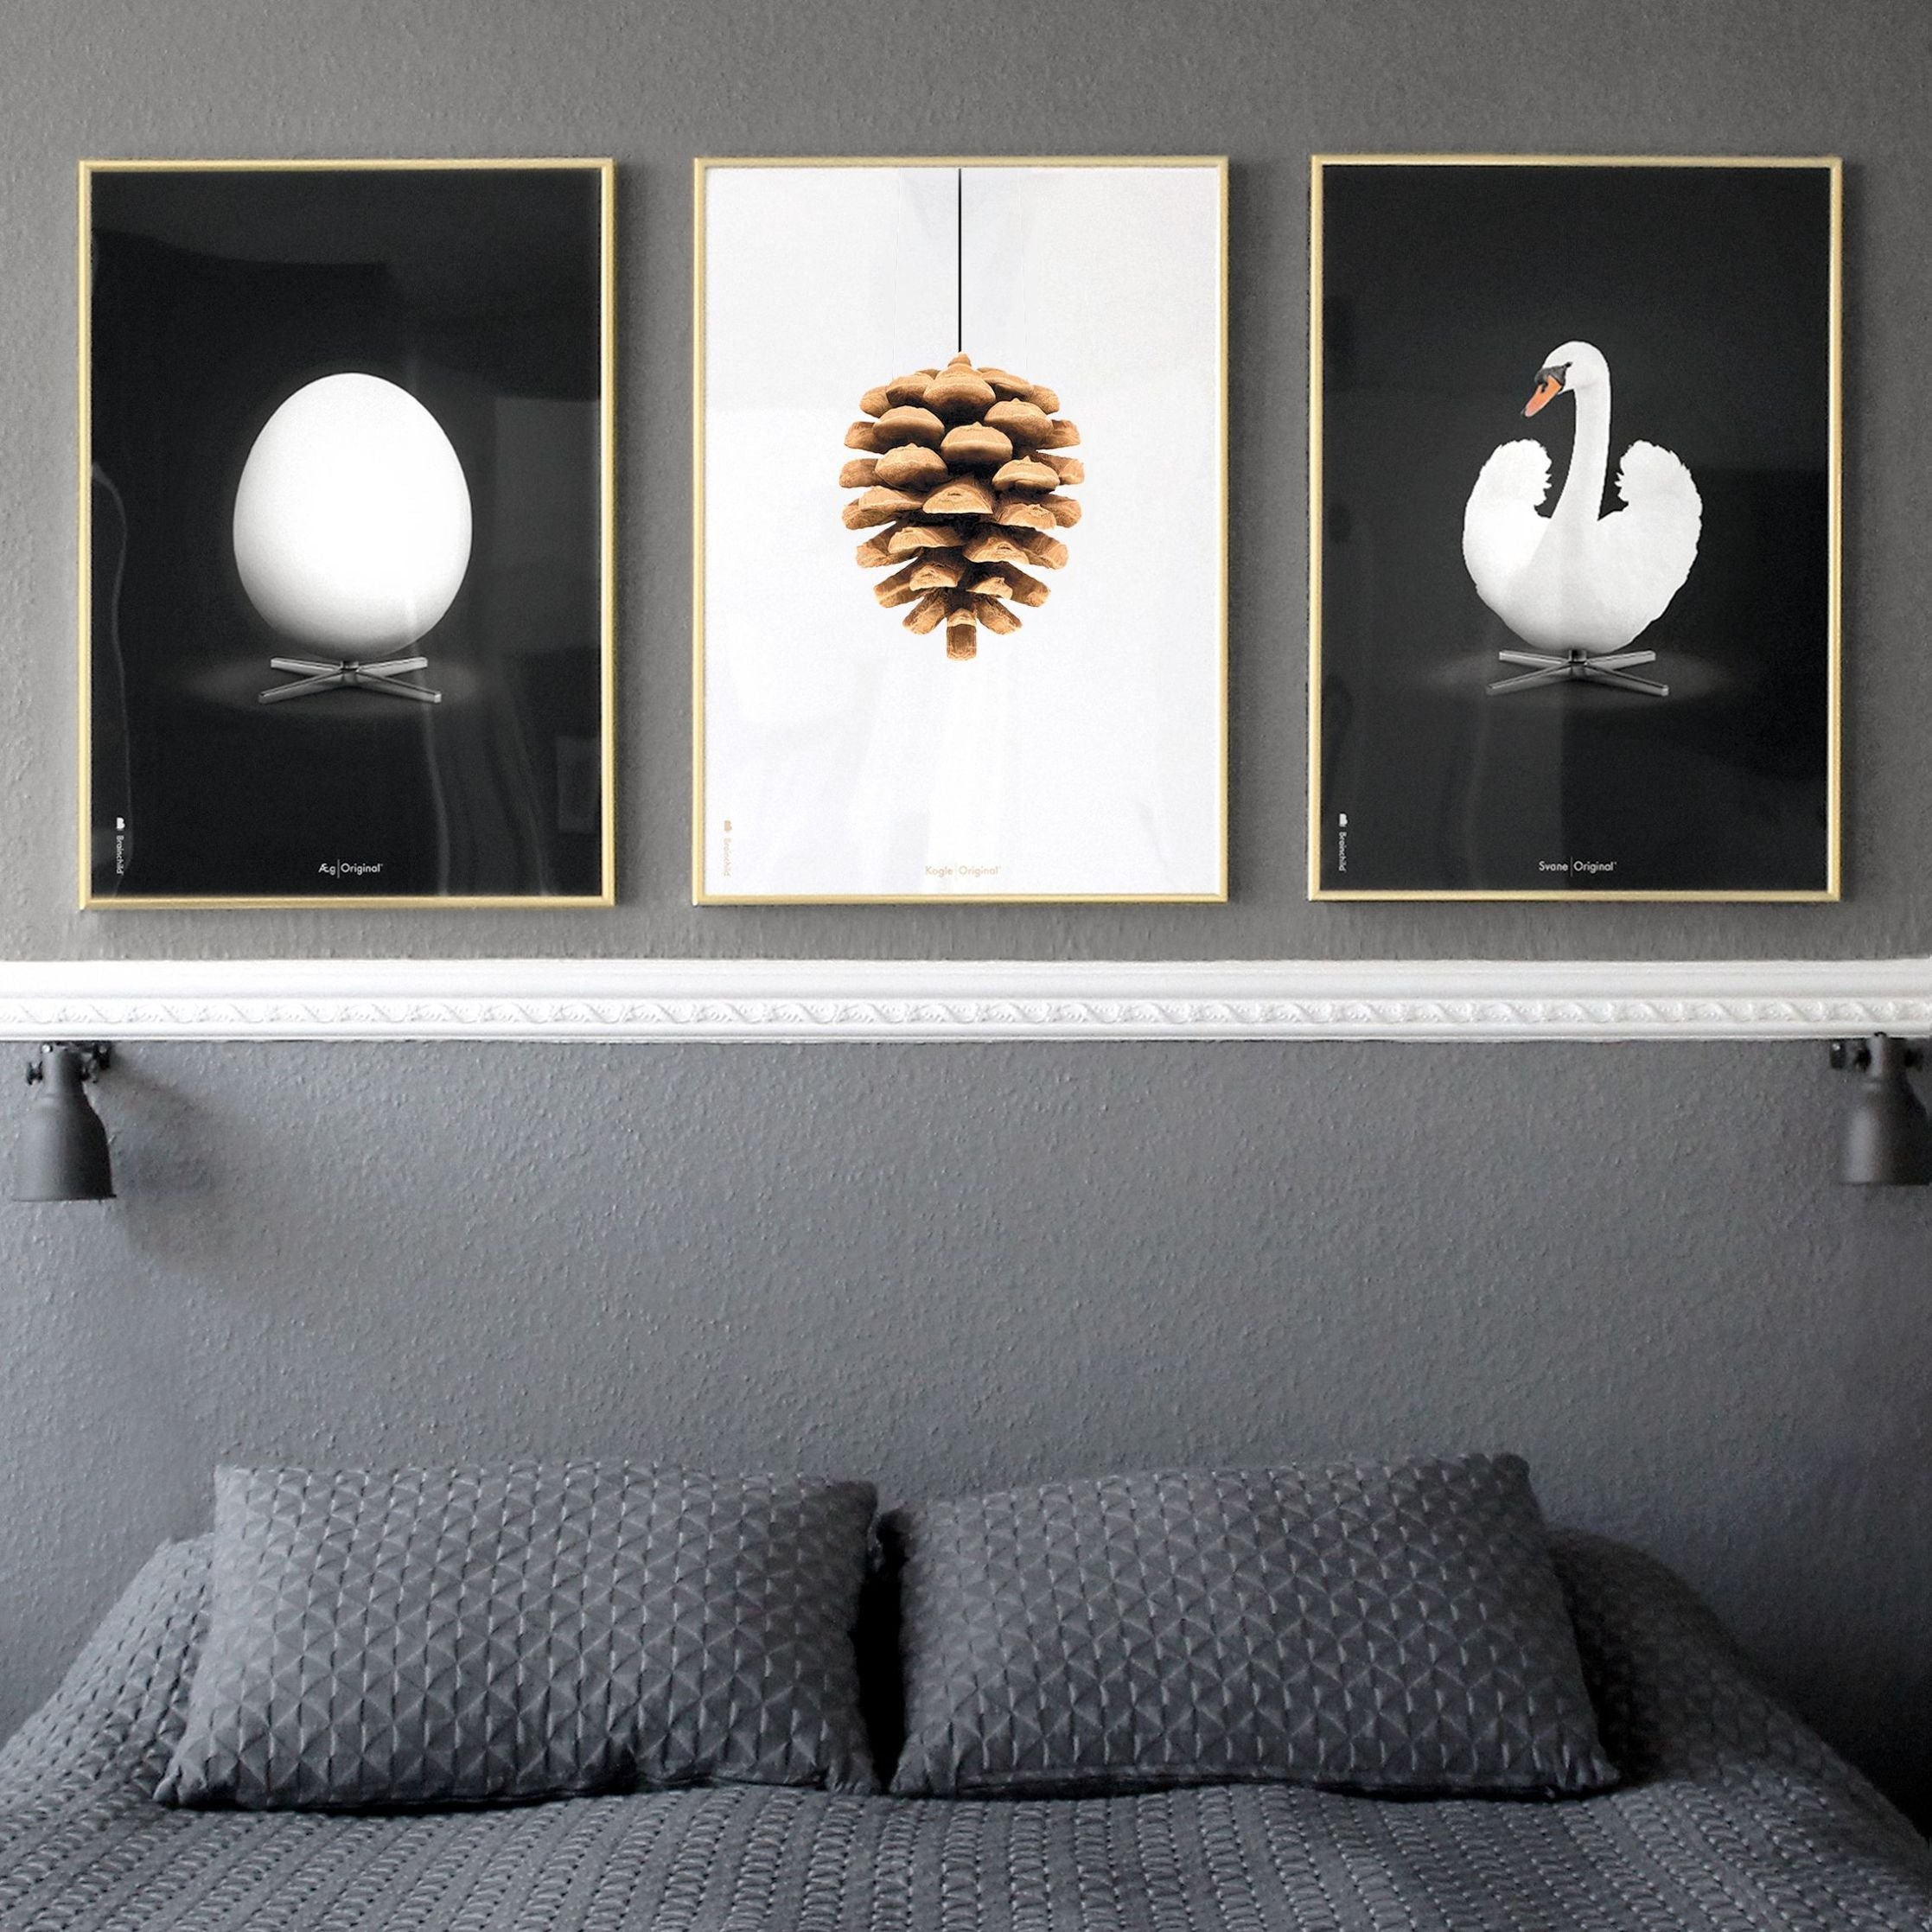 Brainchild Egg Classic Poster, Frame Made Of Light Wood A5, Black Background